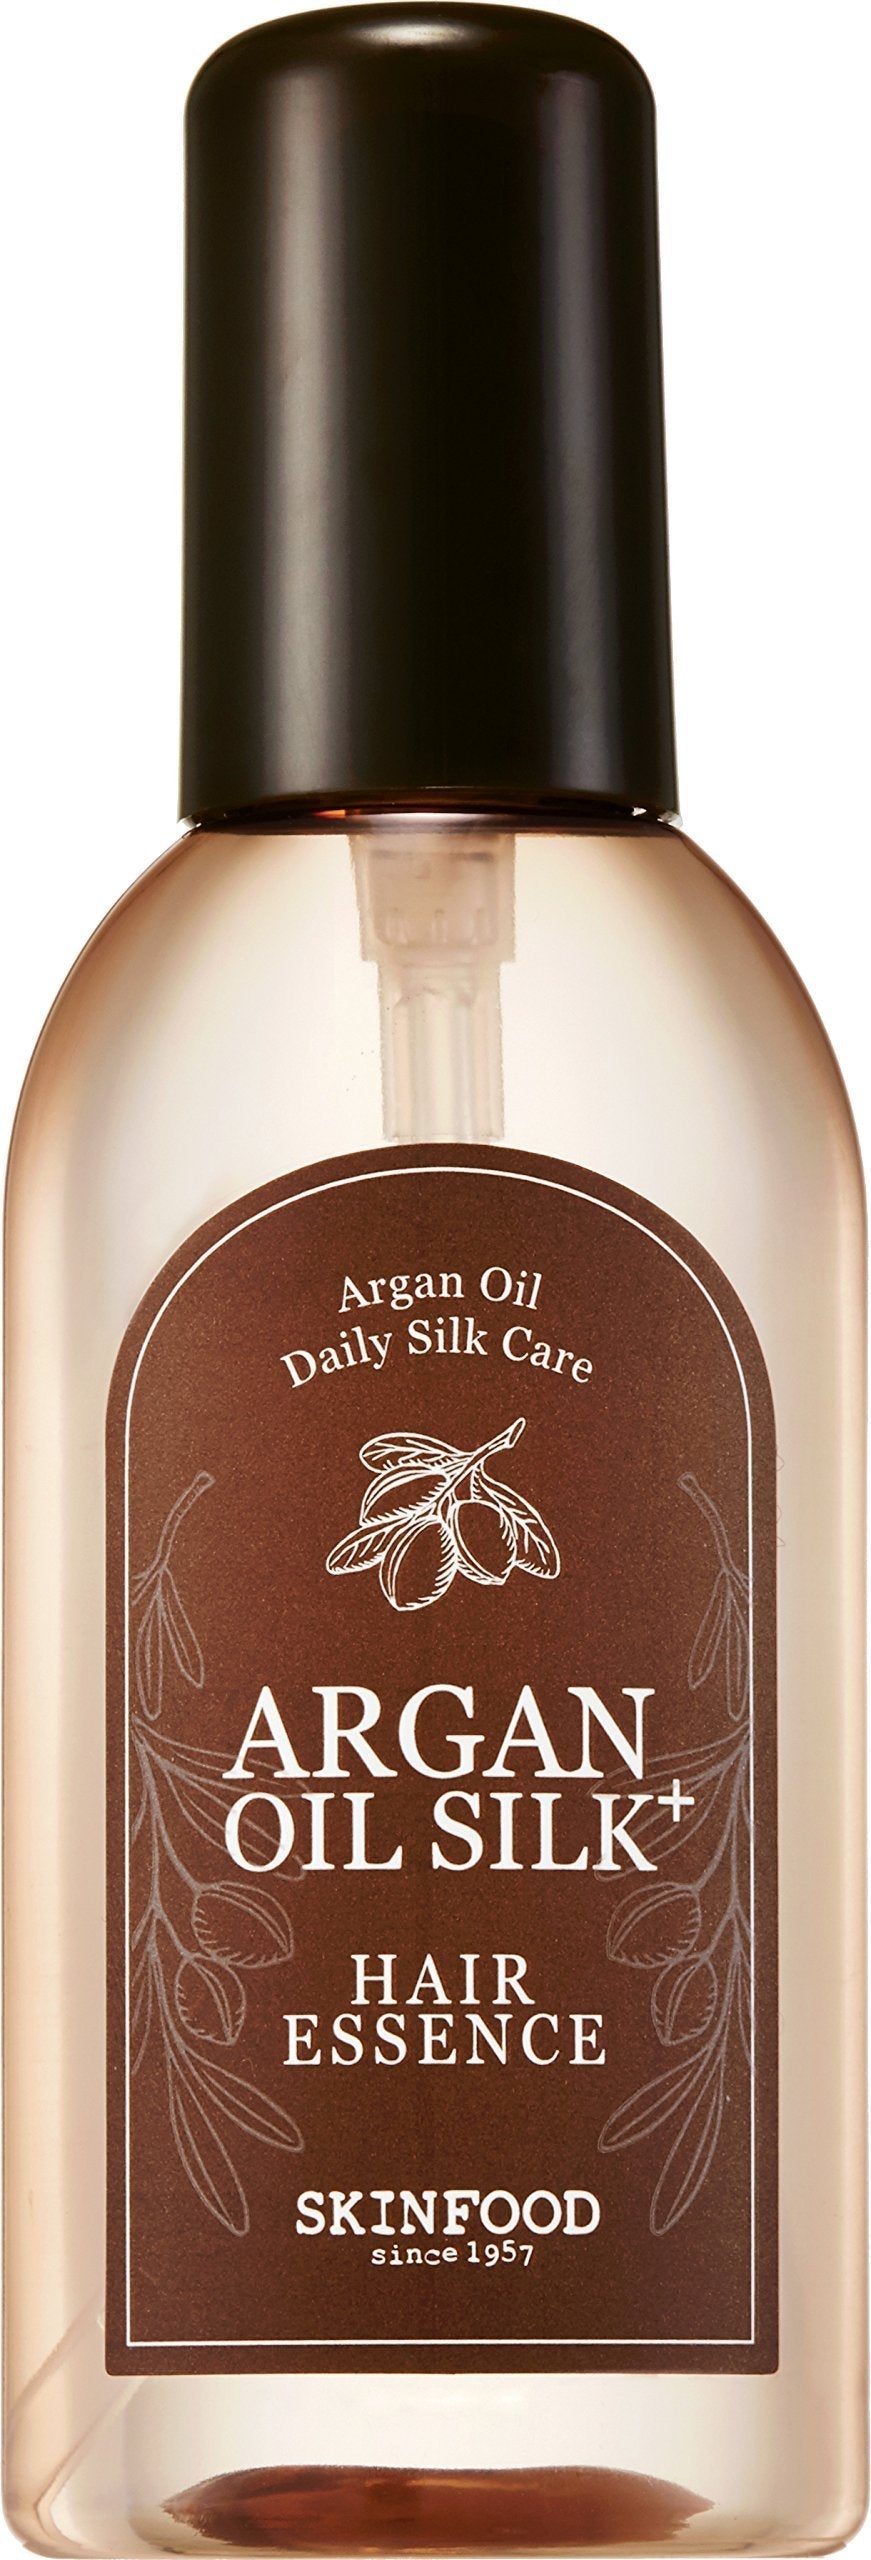 [Australia] - Skinfood Natural Argan Oil for Hair, Skin, Nails, Beard and Cuticles, Silk Essence - 100 mL Argan Oil Silk Hair Essence 100ml 